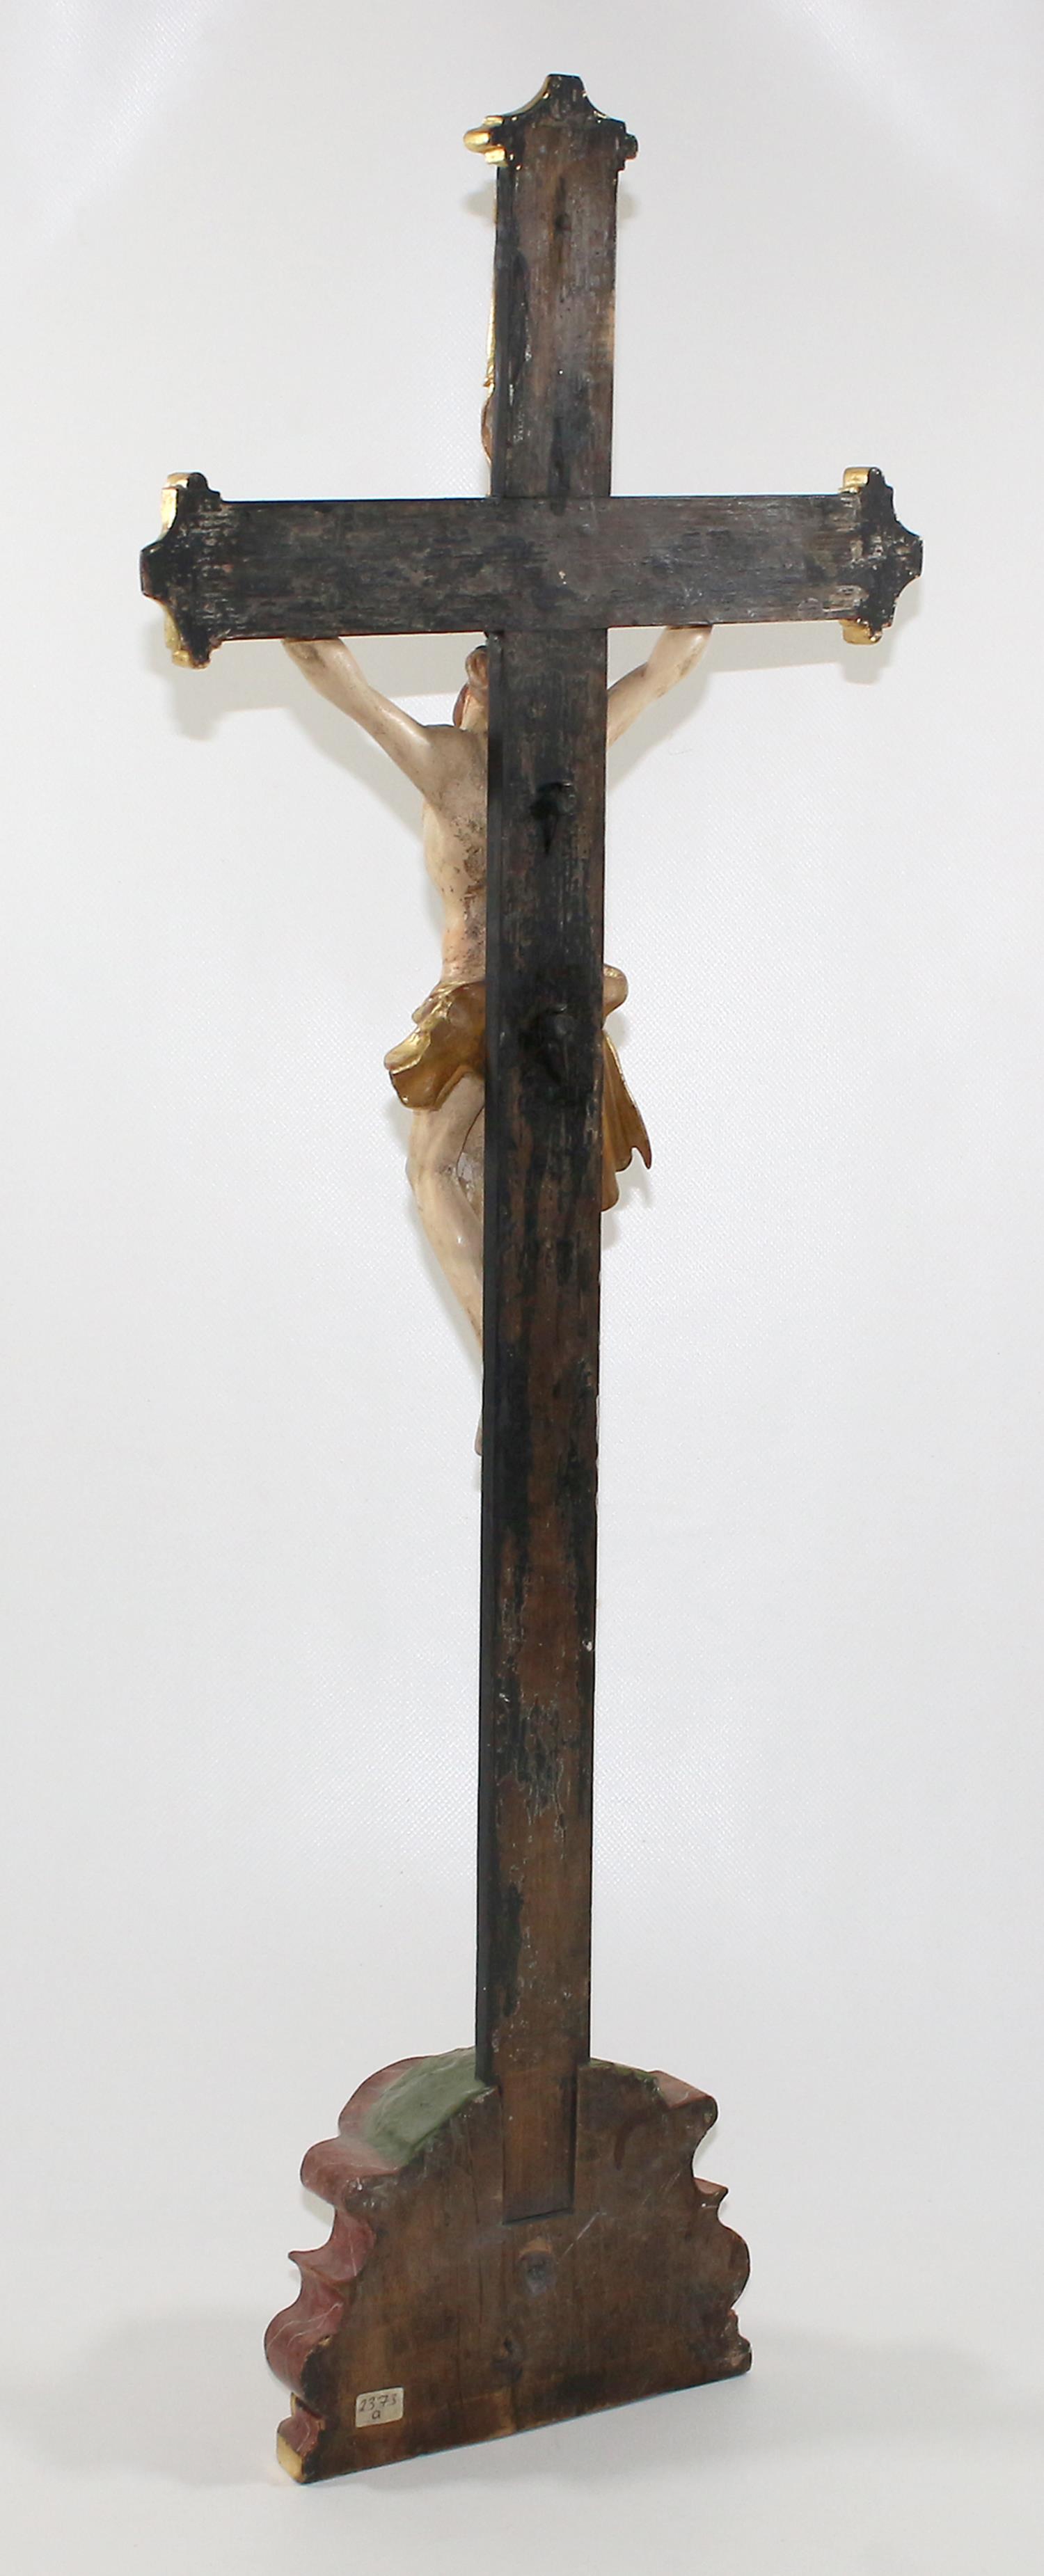 Christus Standkreuz Barock | Bild Nr.2